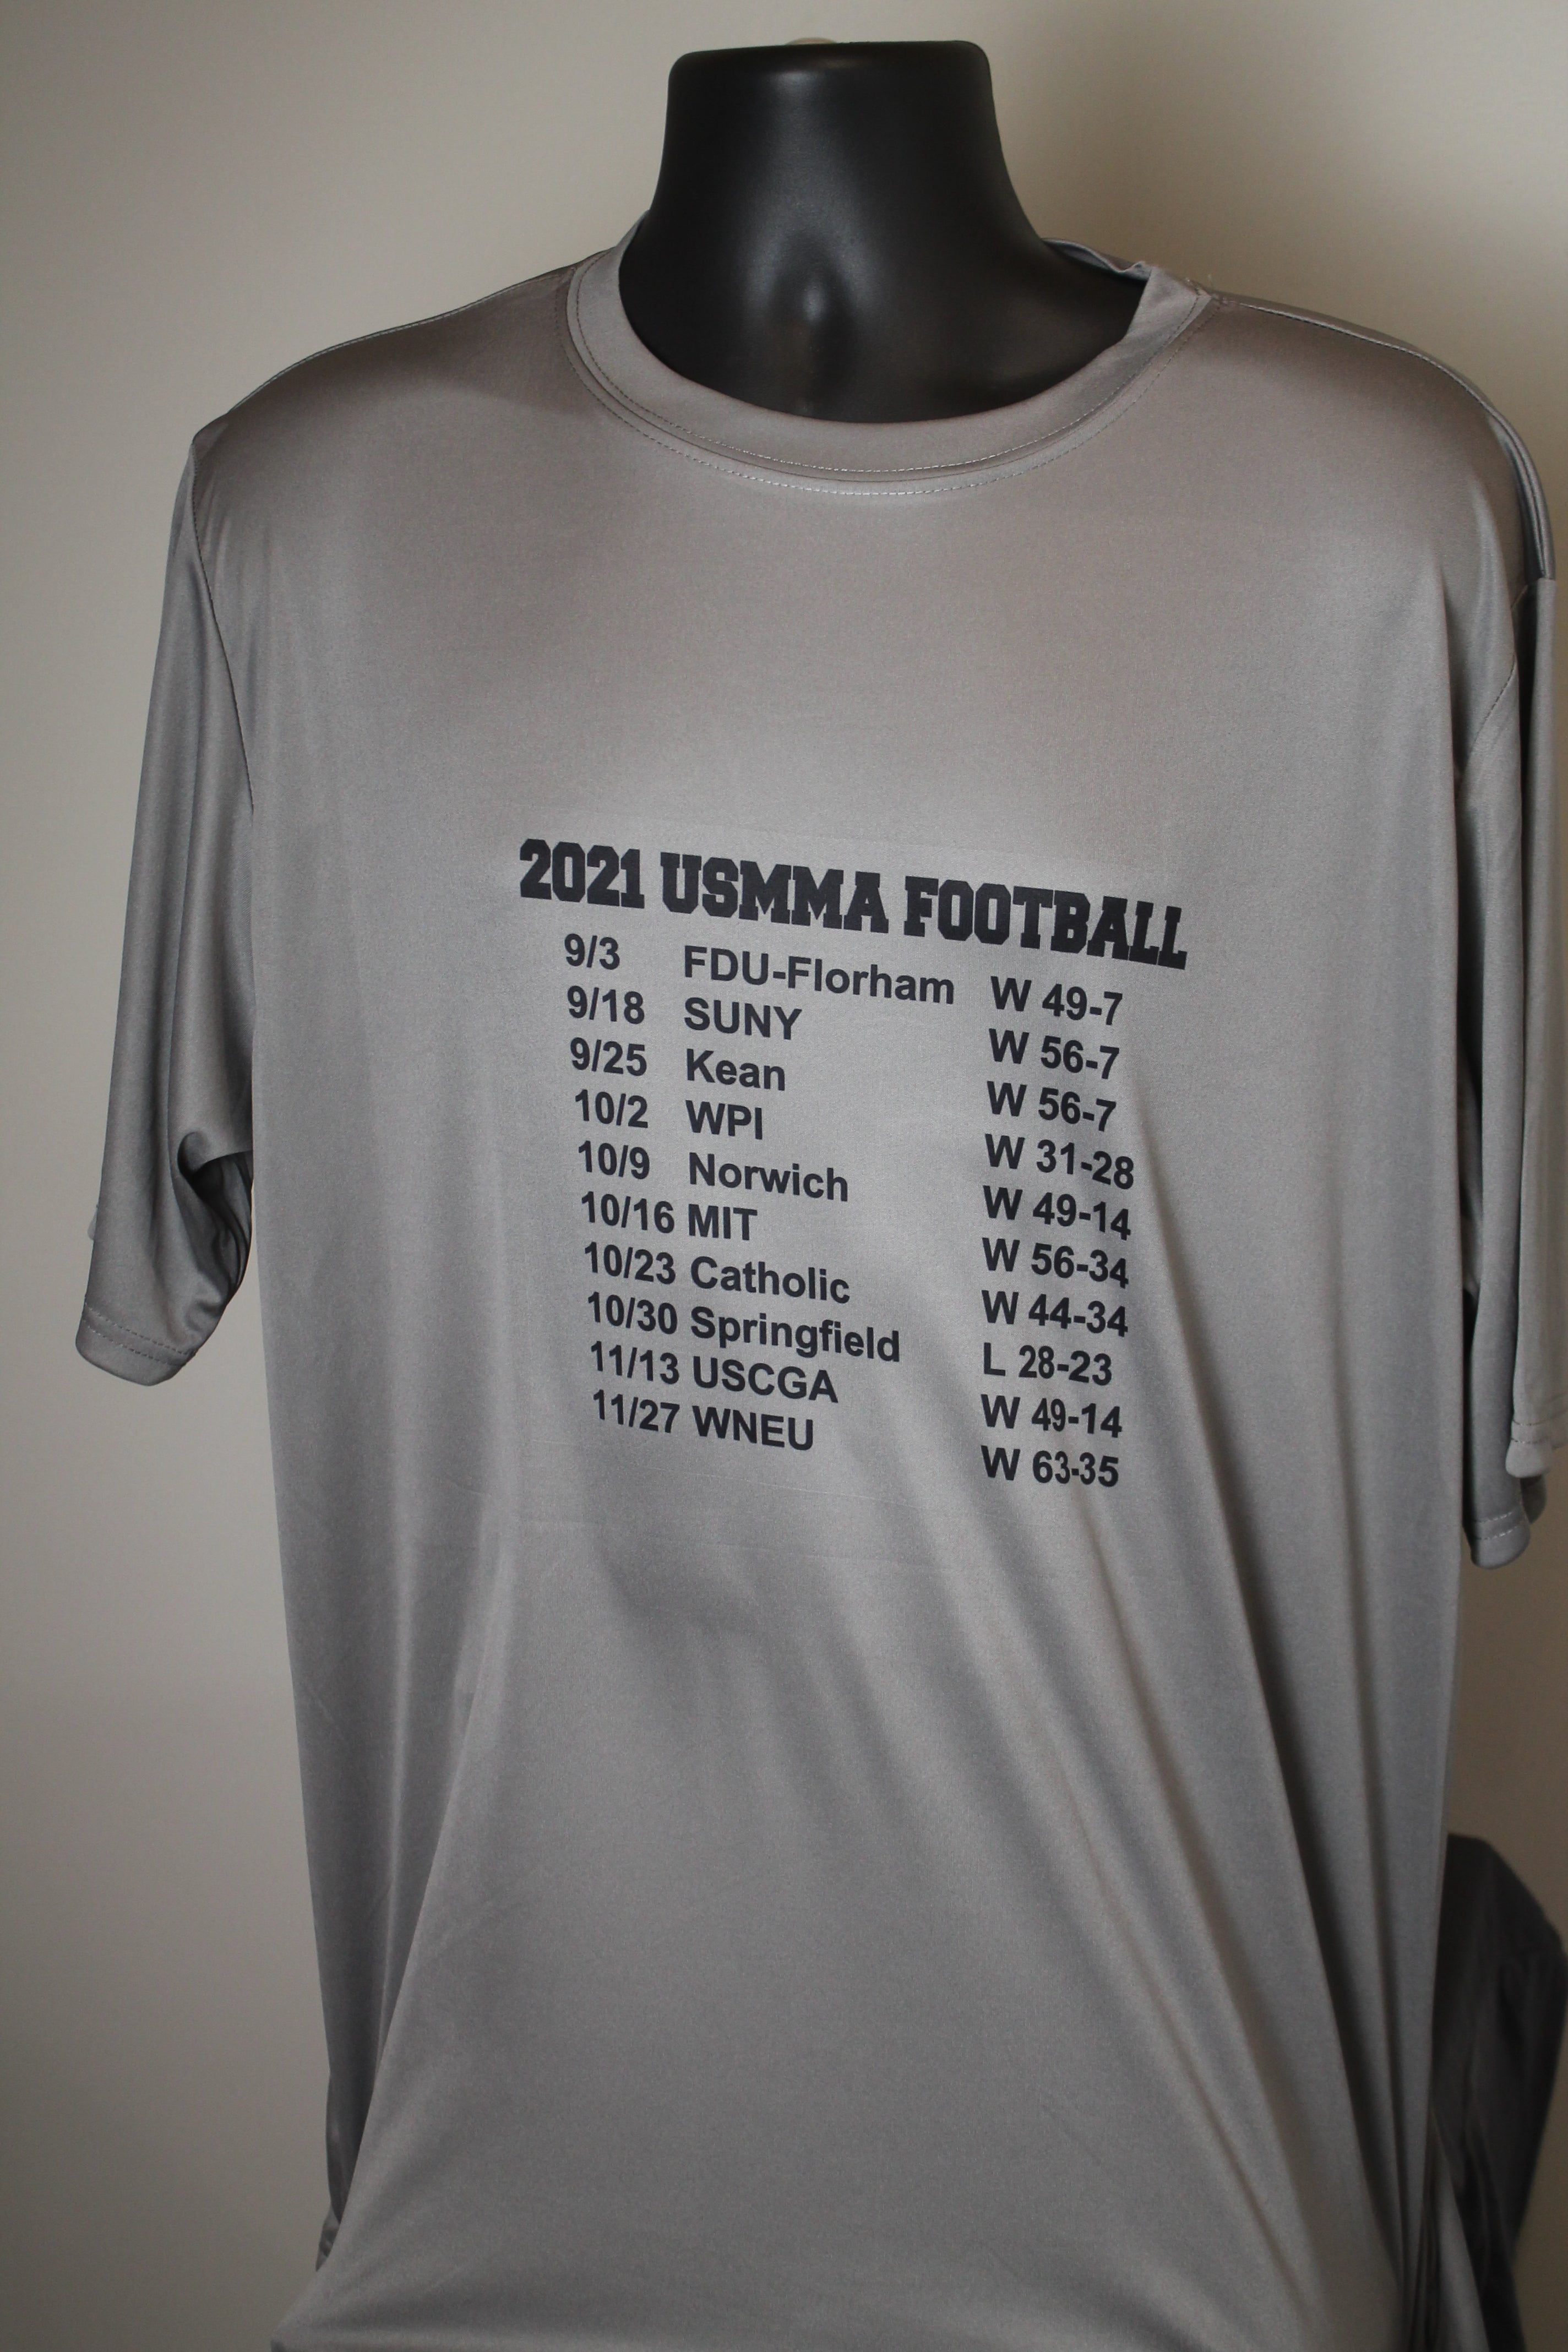 Coach Toop USMMA T-shirts